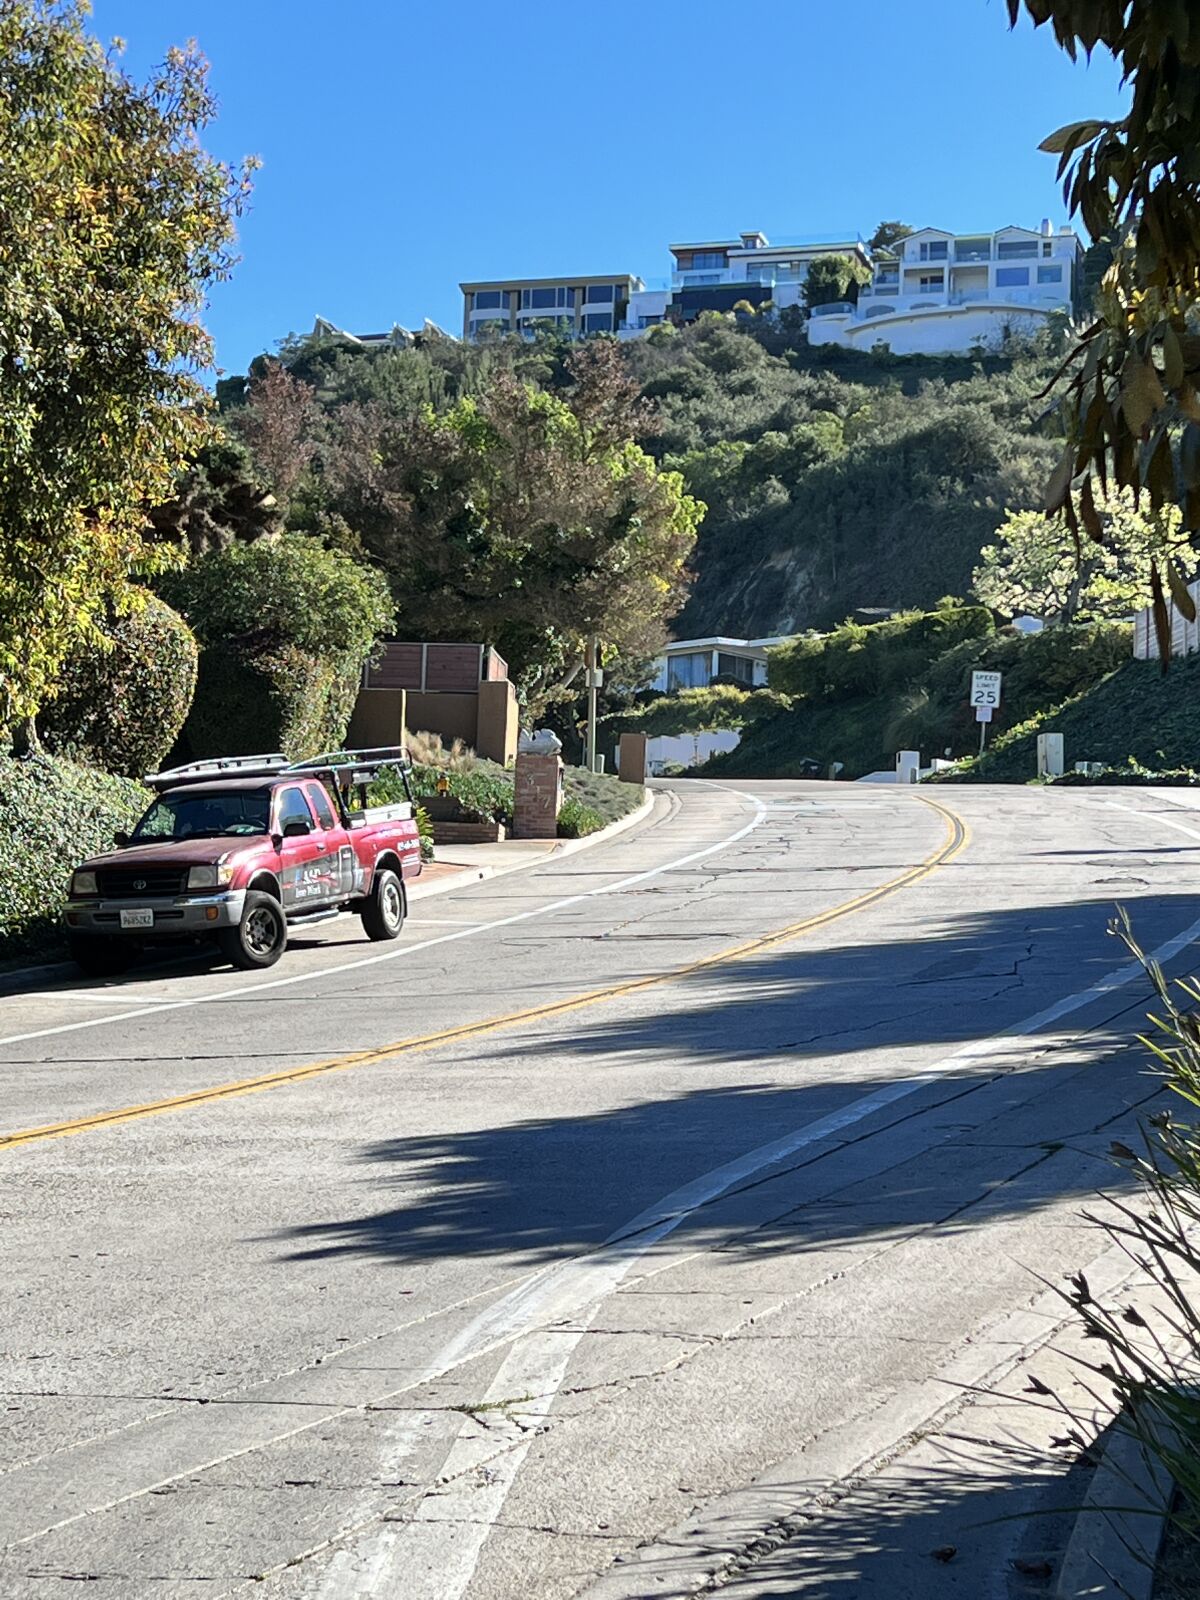 Via Capri is in need of repair, many La Jolla residents say.